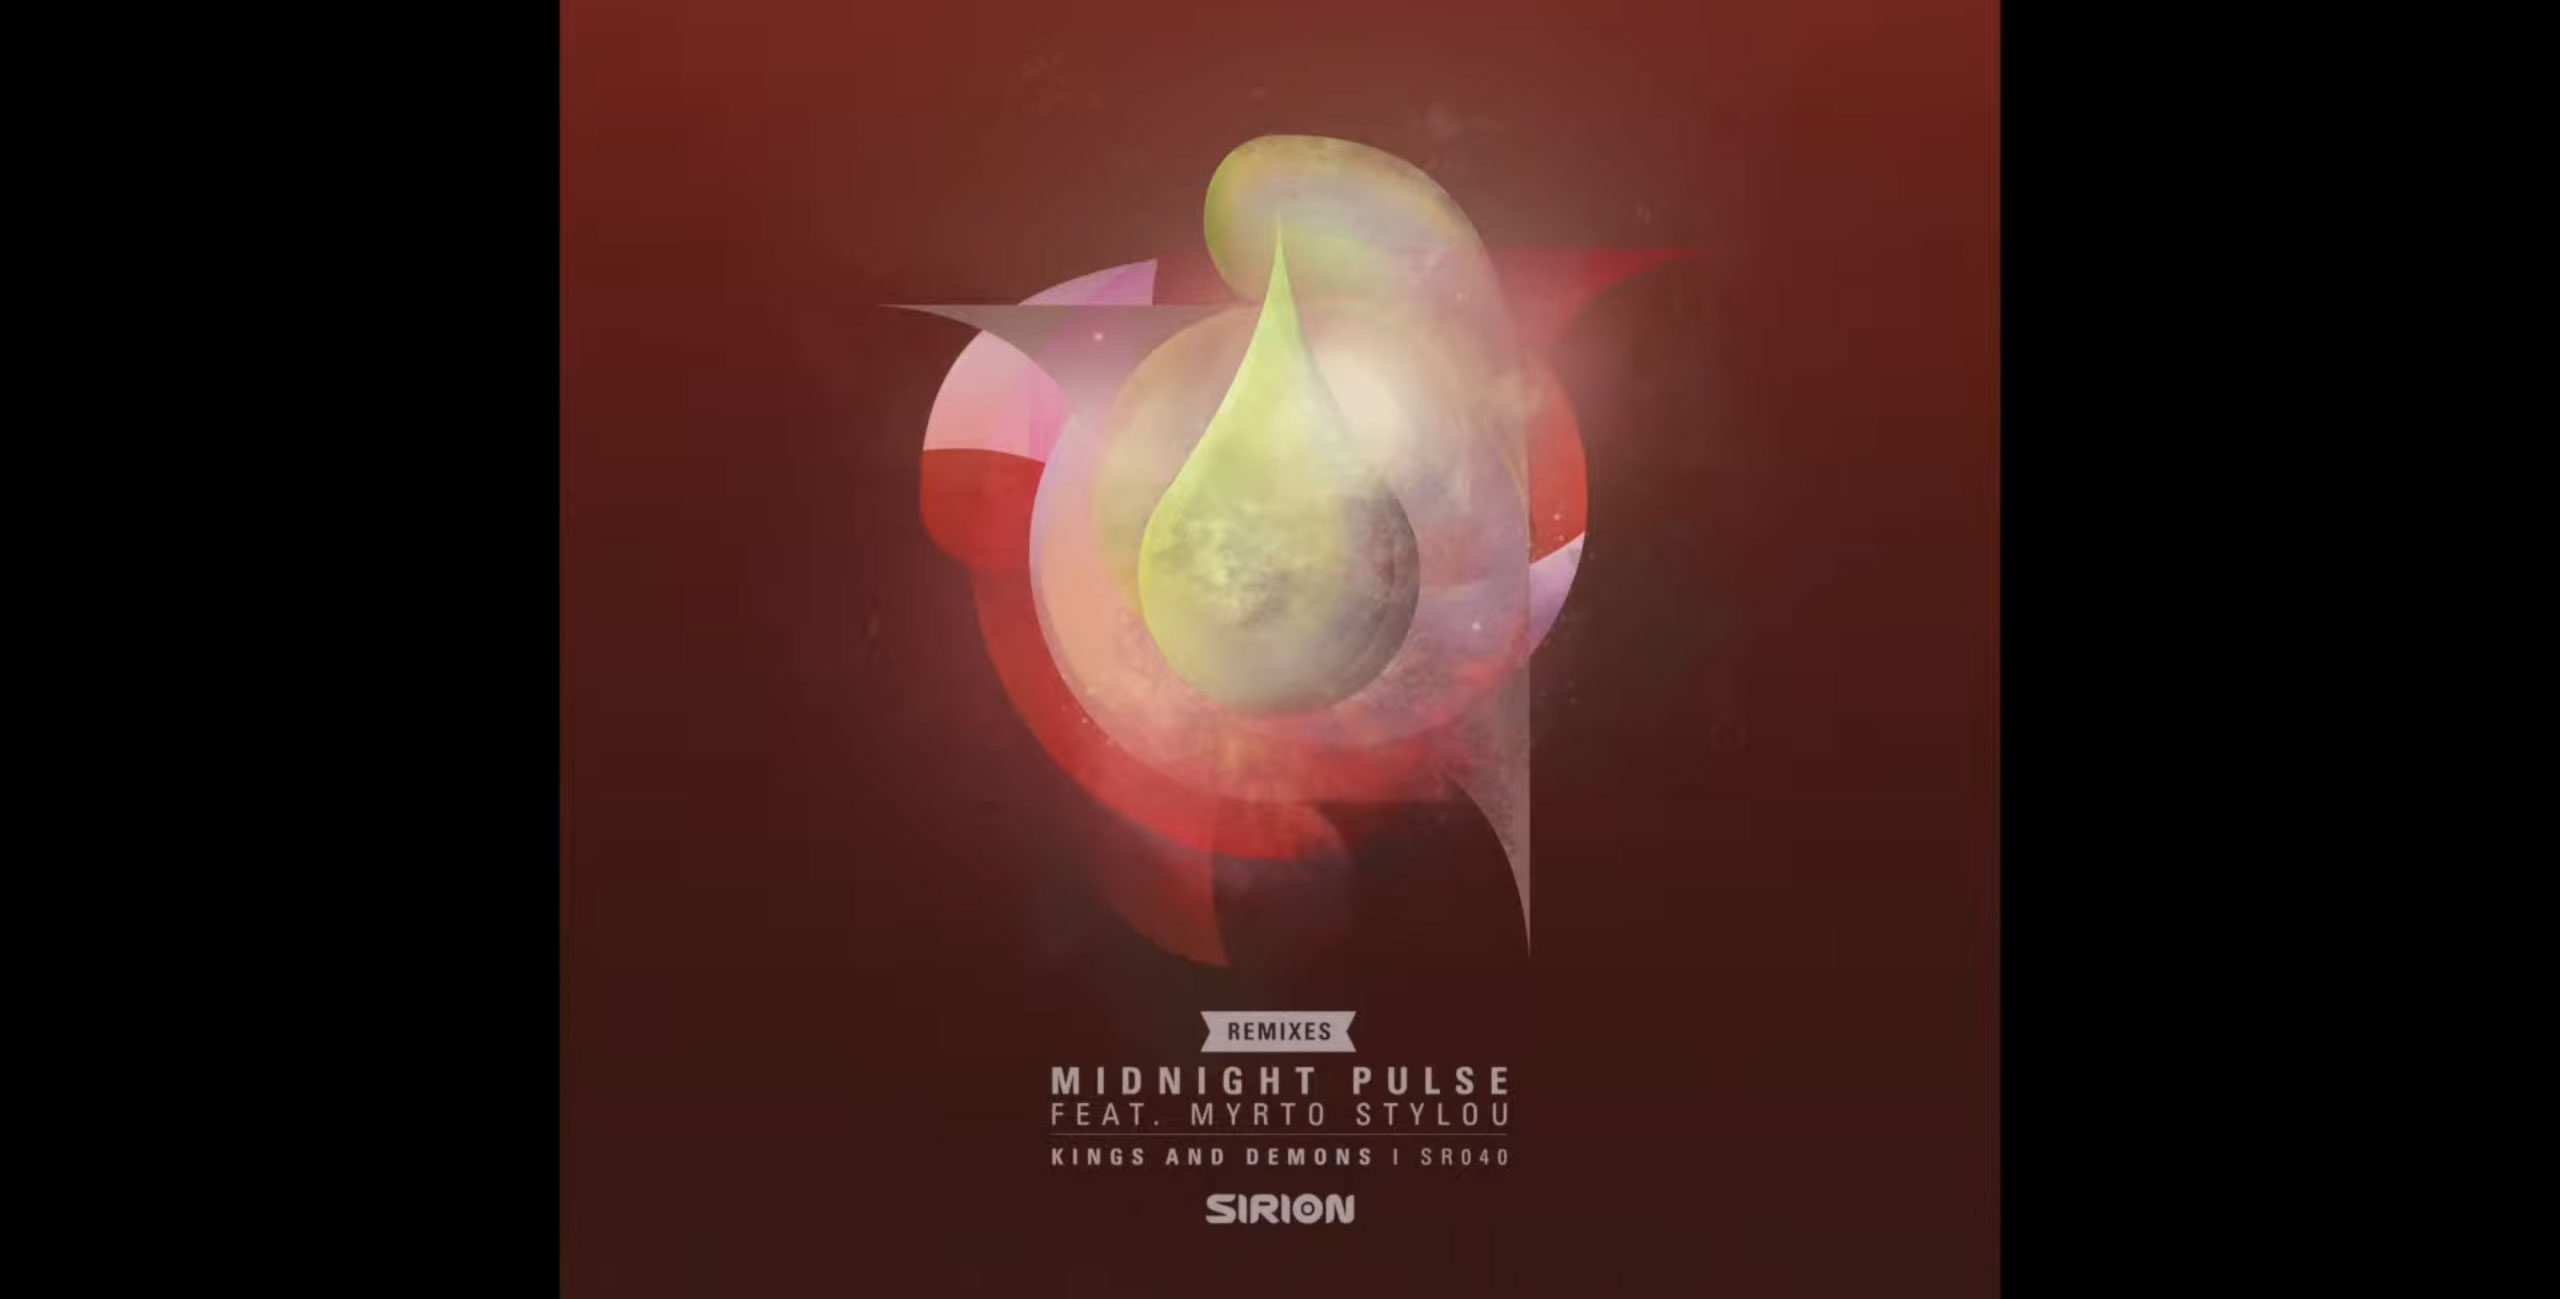 Midnight Pulse -  Stars Above feat. Myrto Stylou - Patrick Zigon Space Dub - Sirion Records